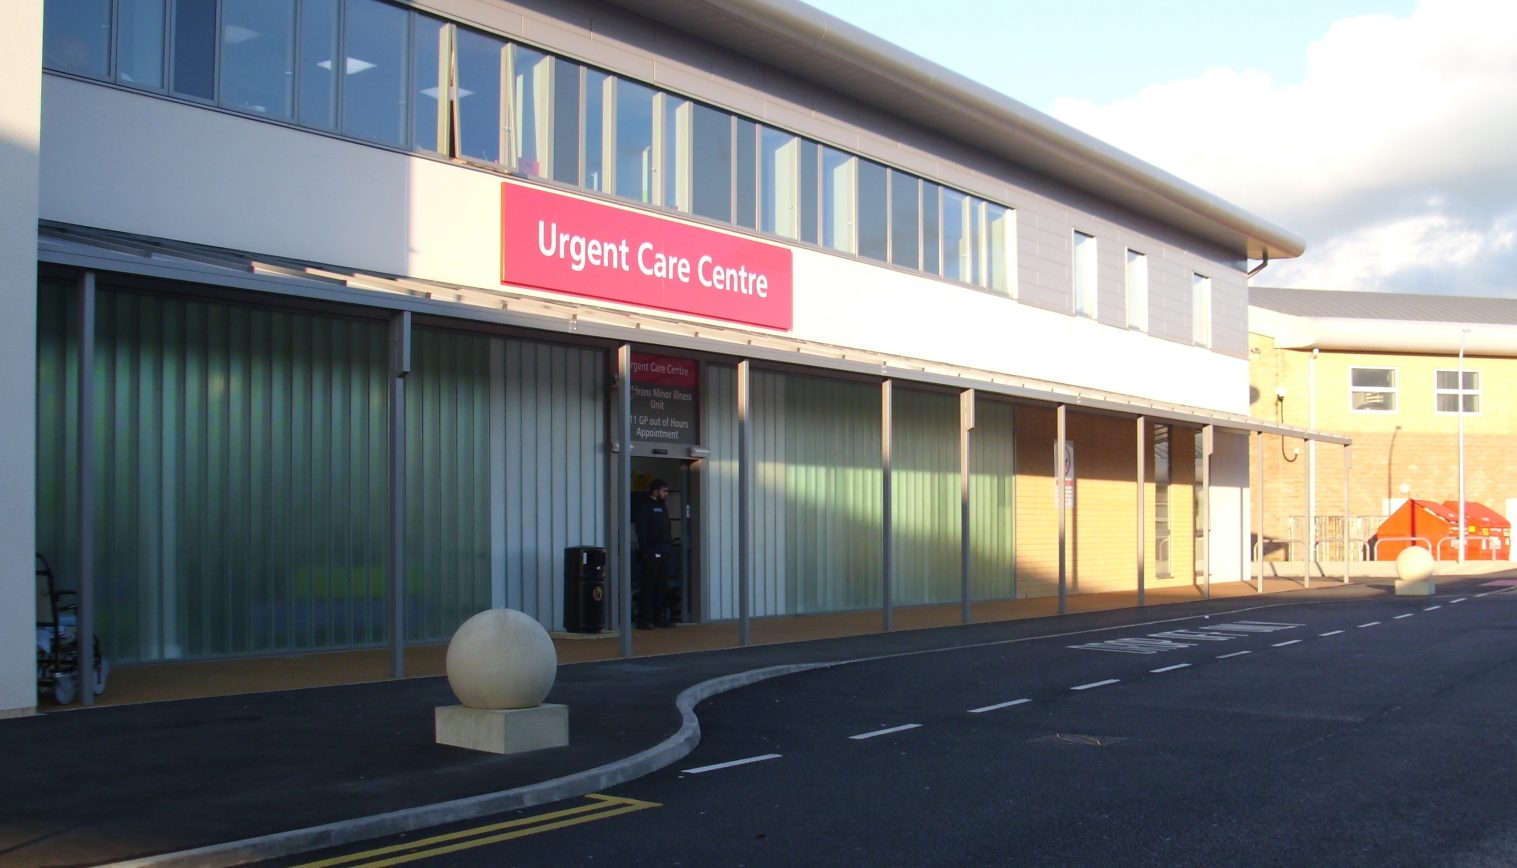 Burnley General Hospital – Case Study